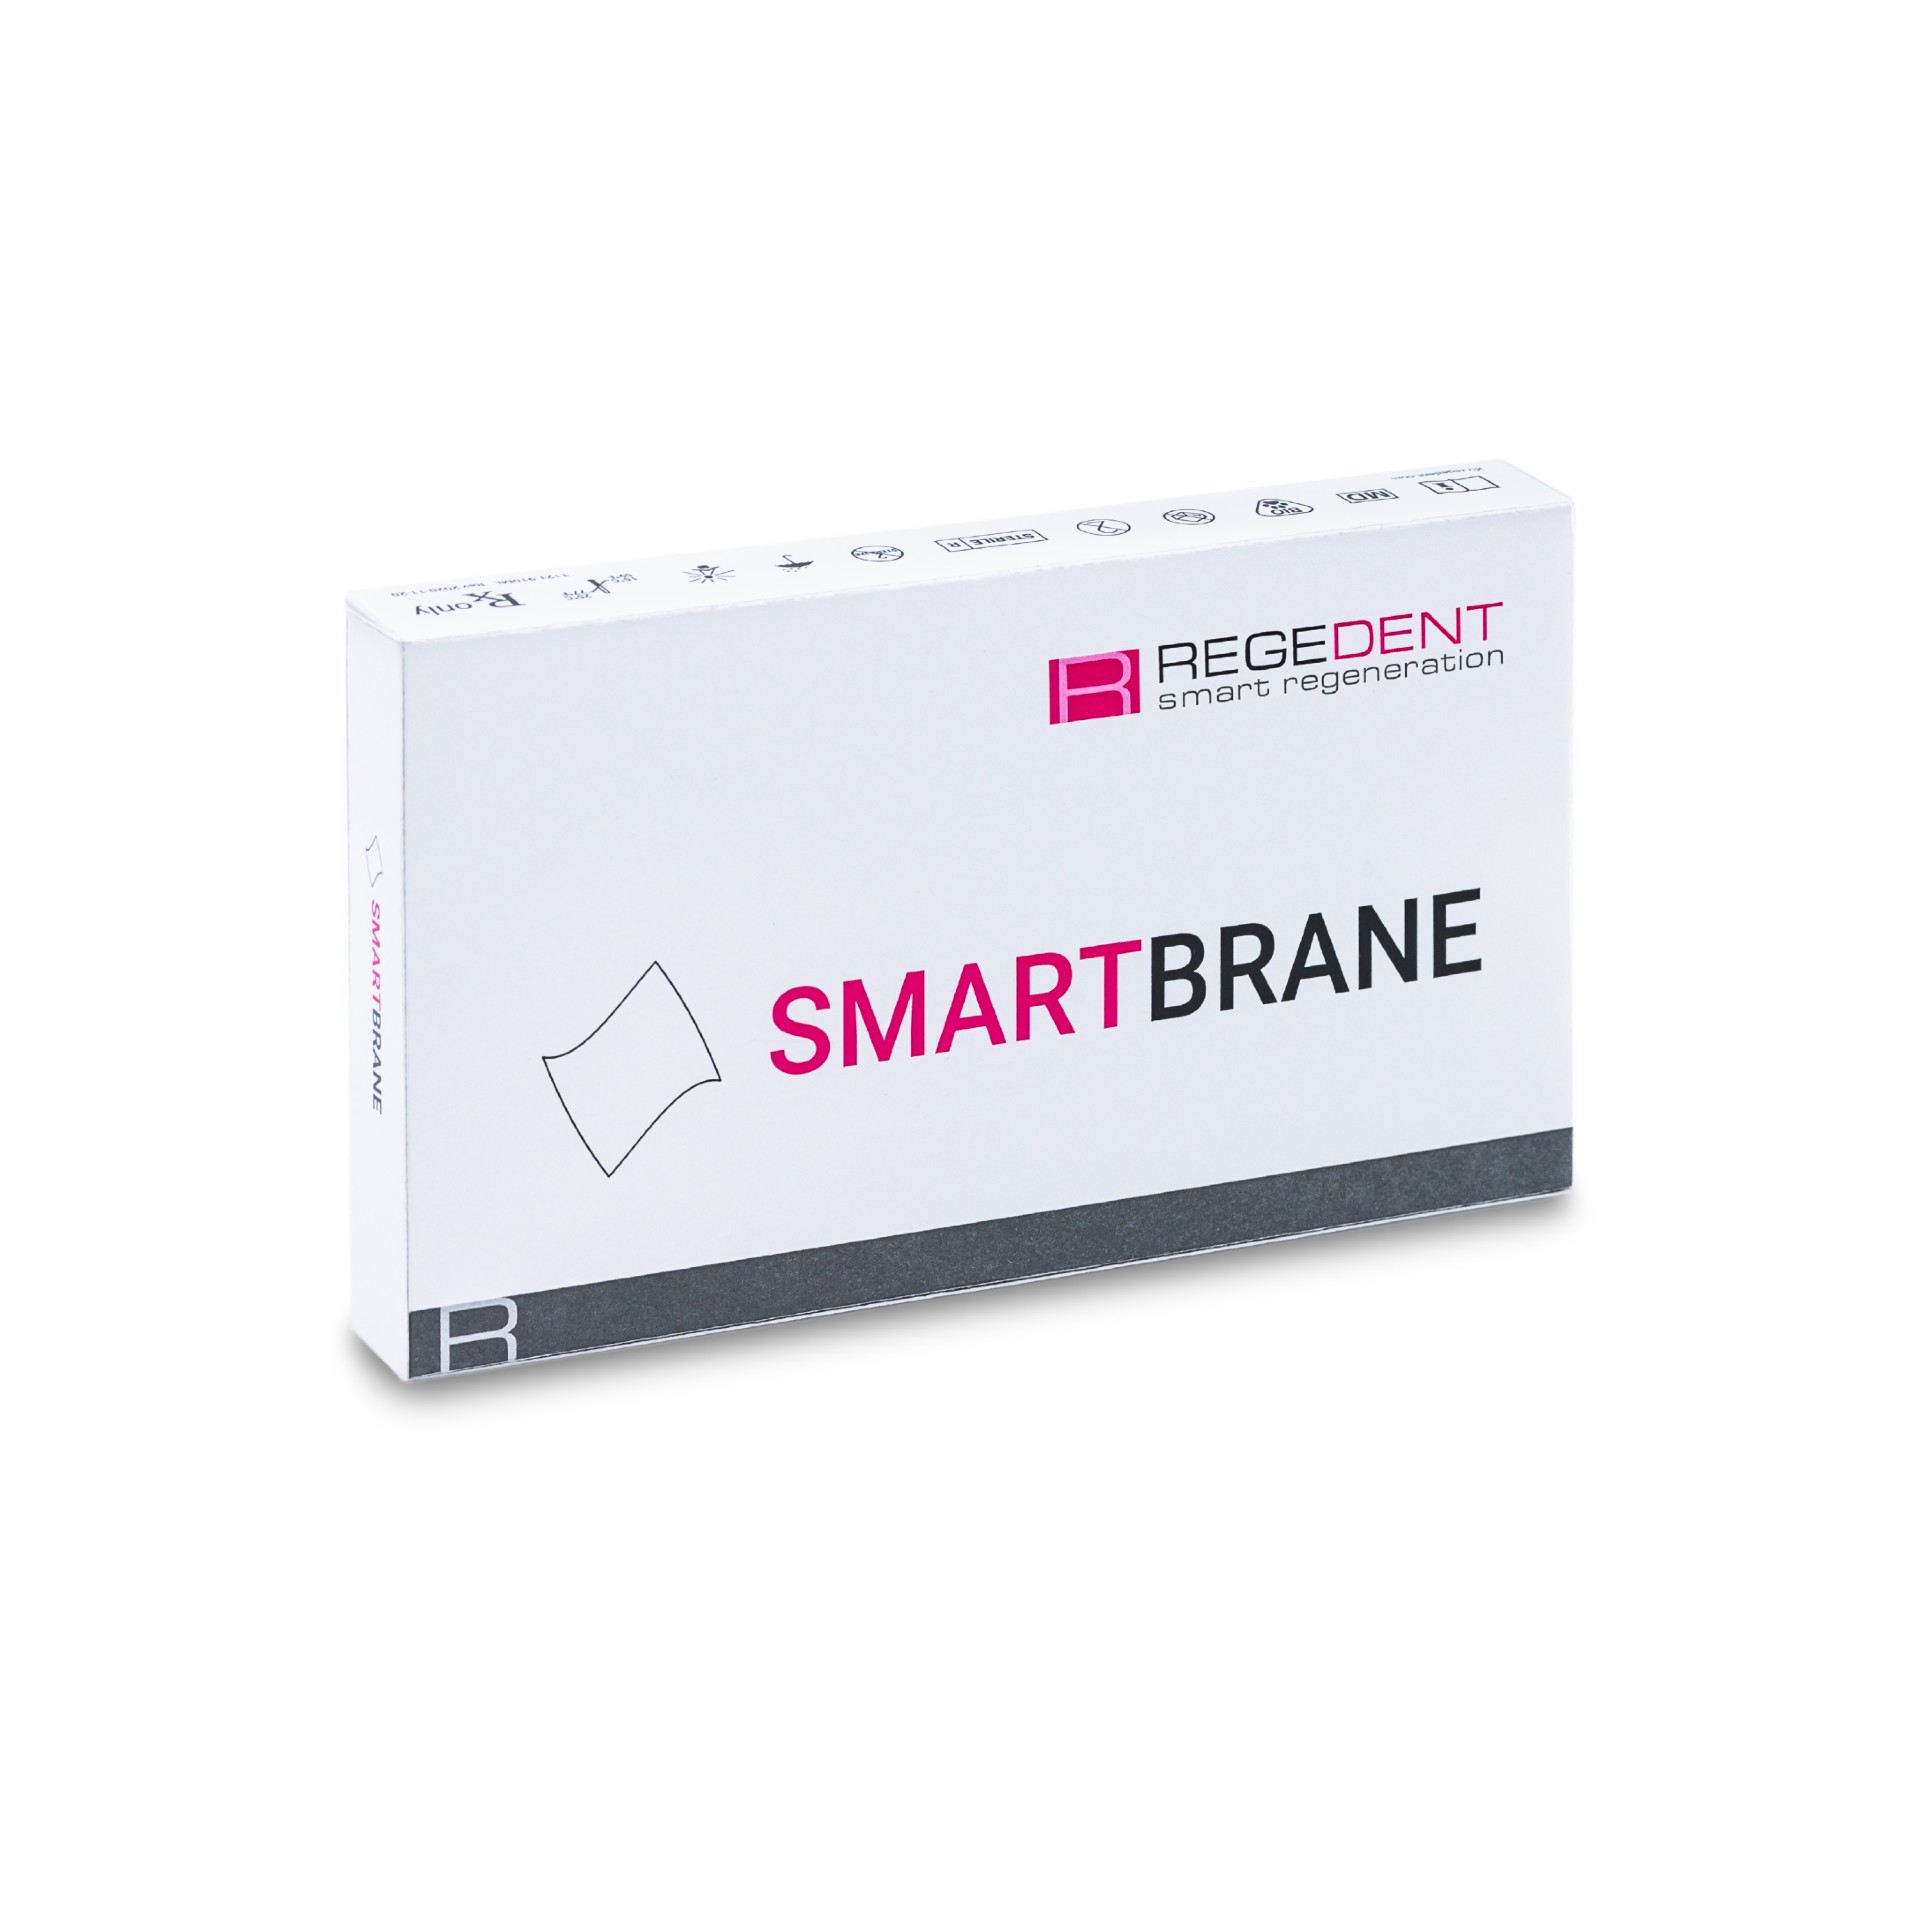 Box of resorbable porcine pericardium membrane, Smartbrane